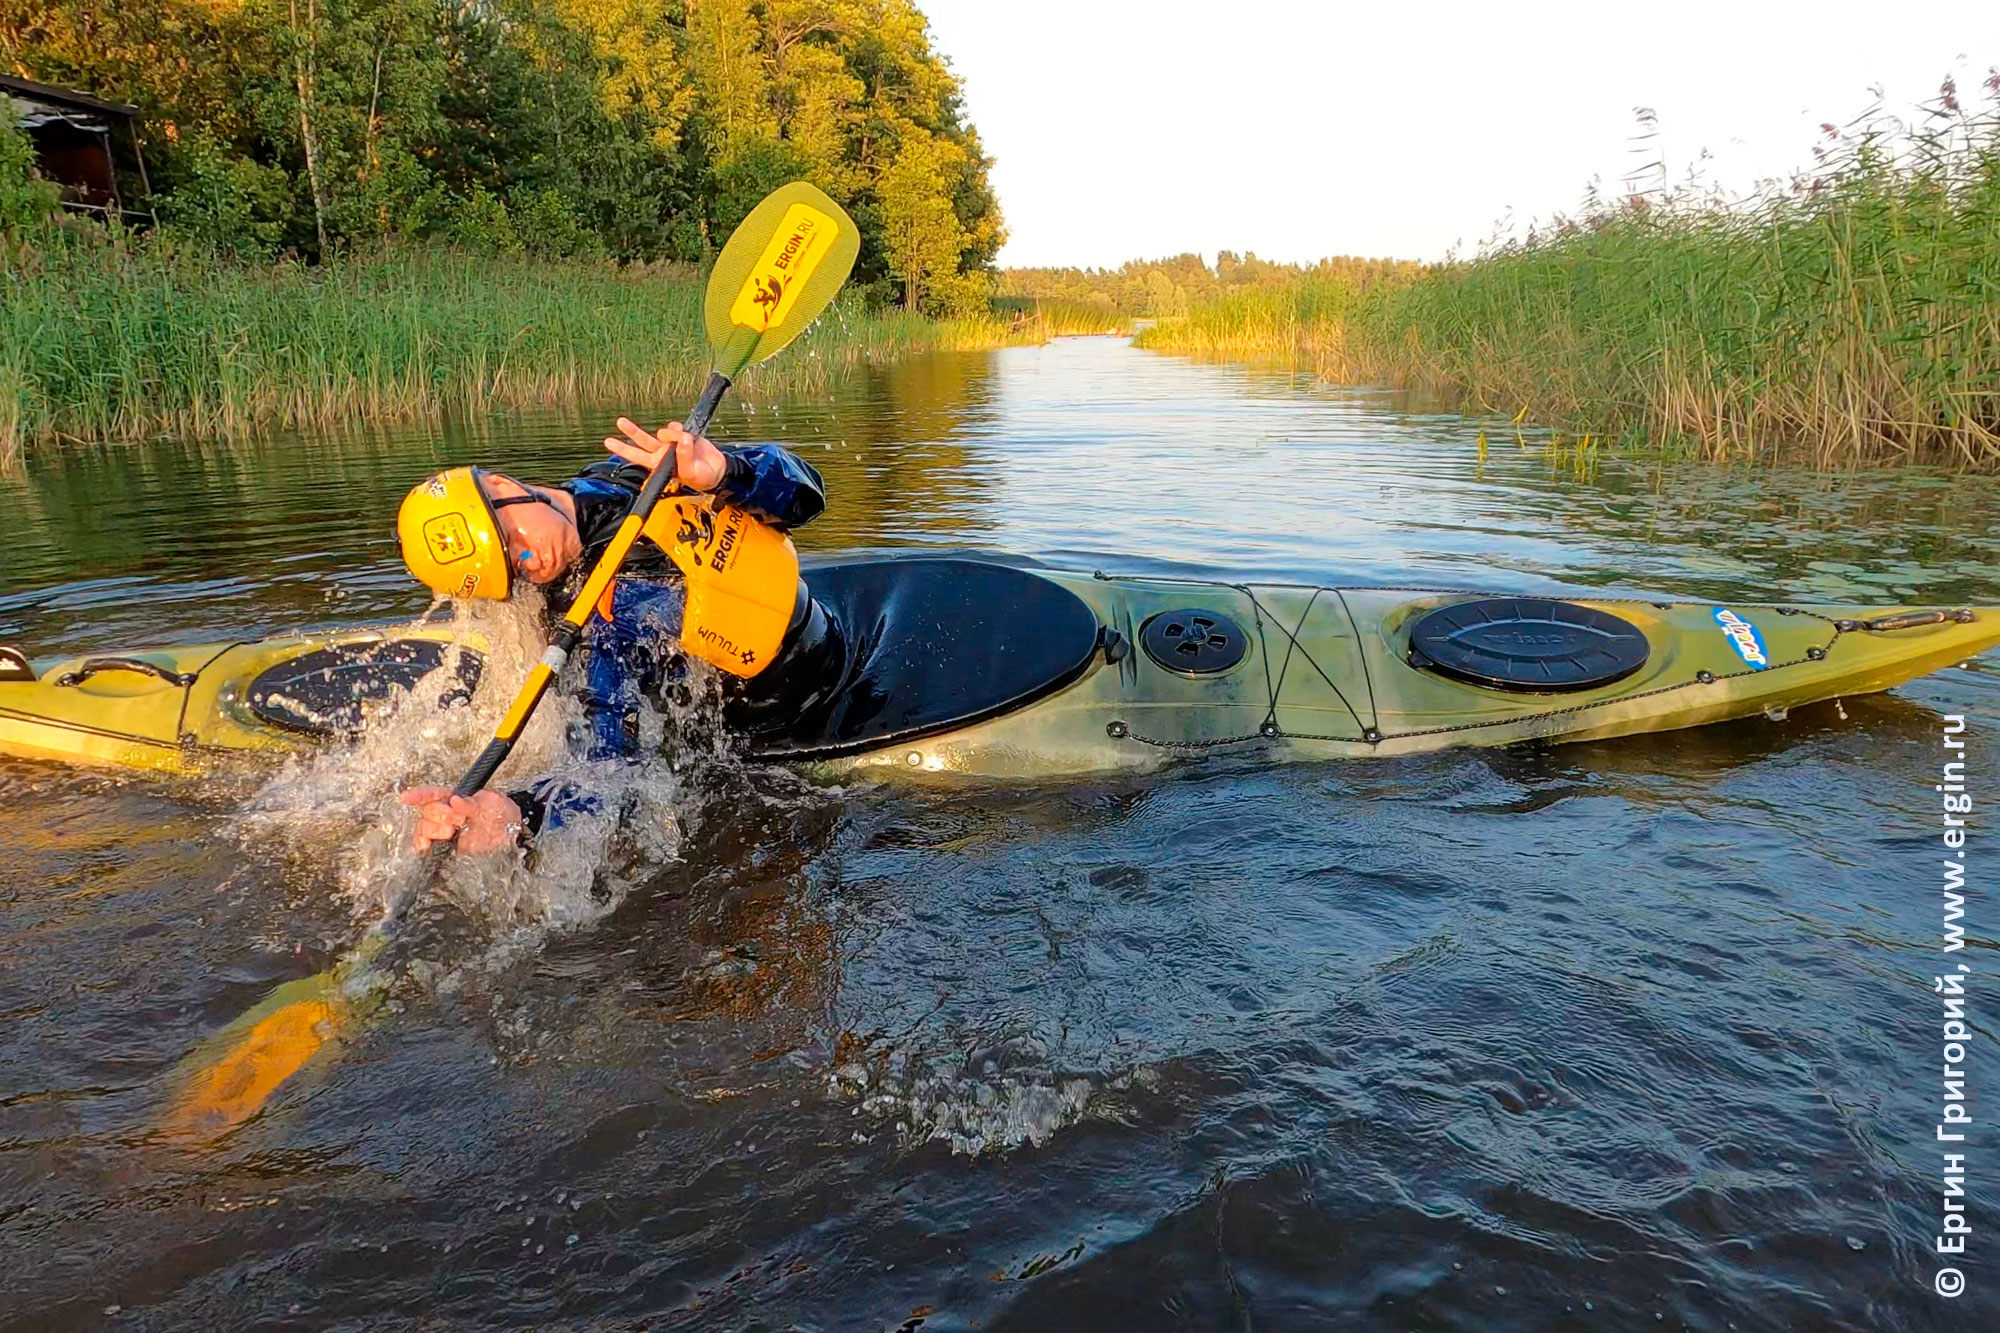 Эскимосский переворот на каяке Winner kayaks Expedition